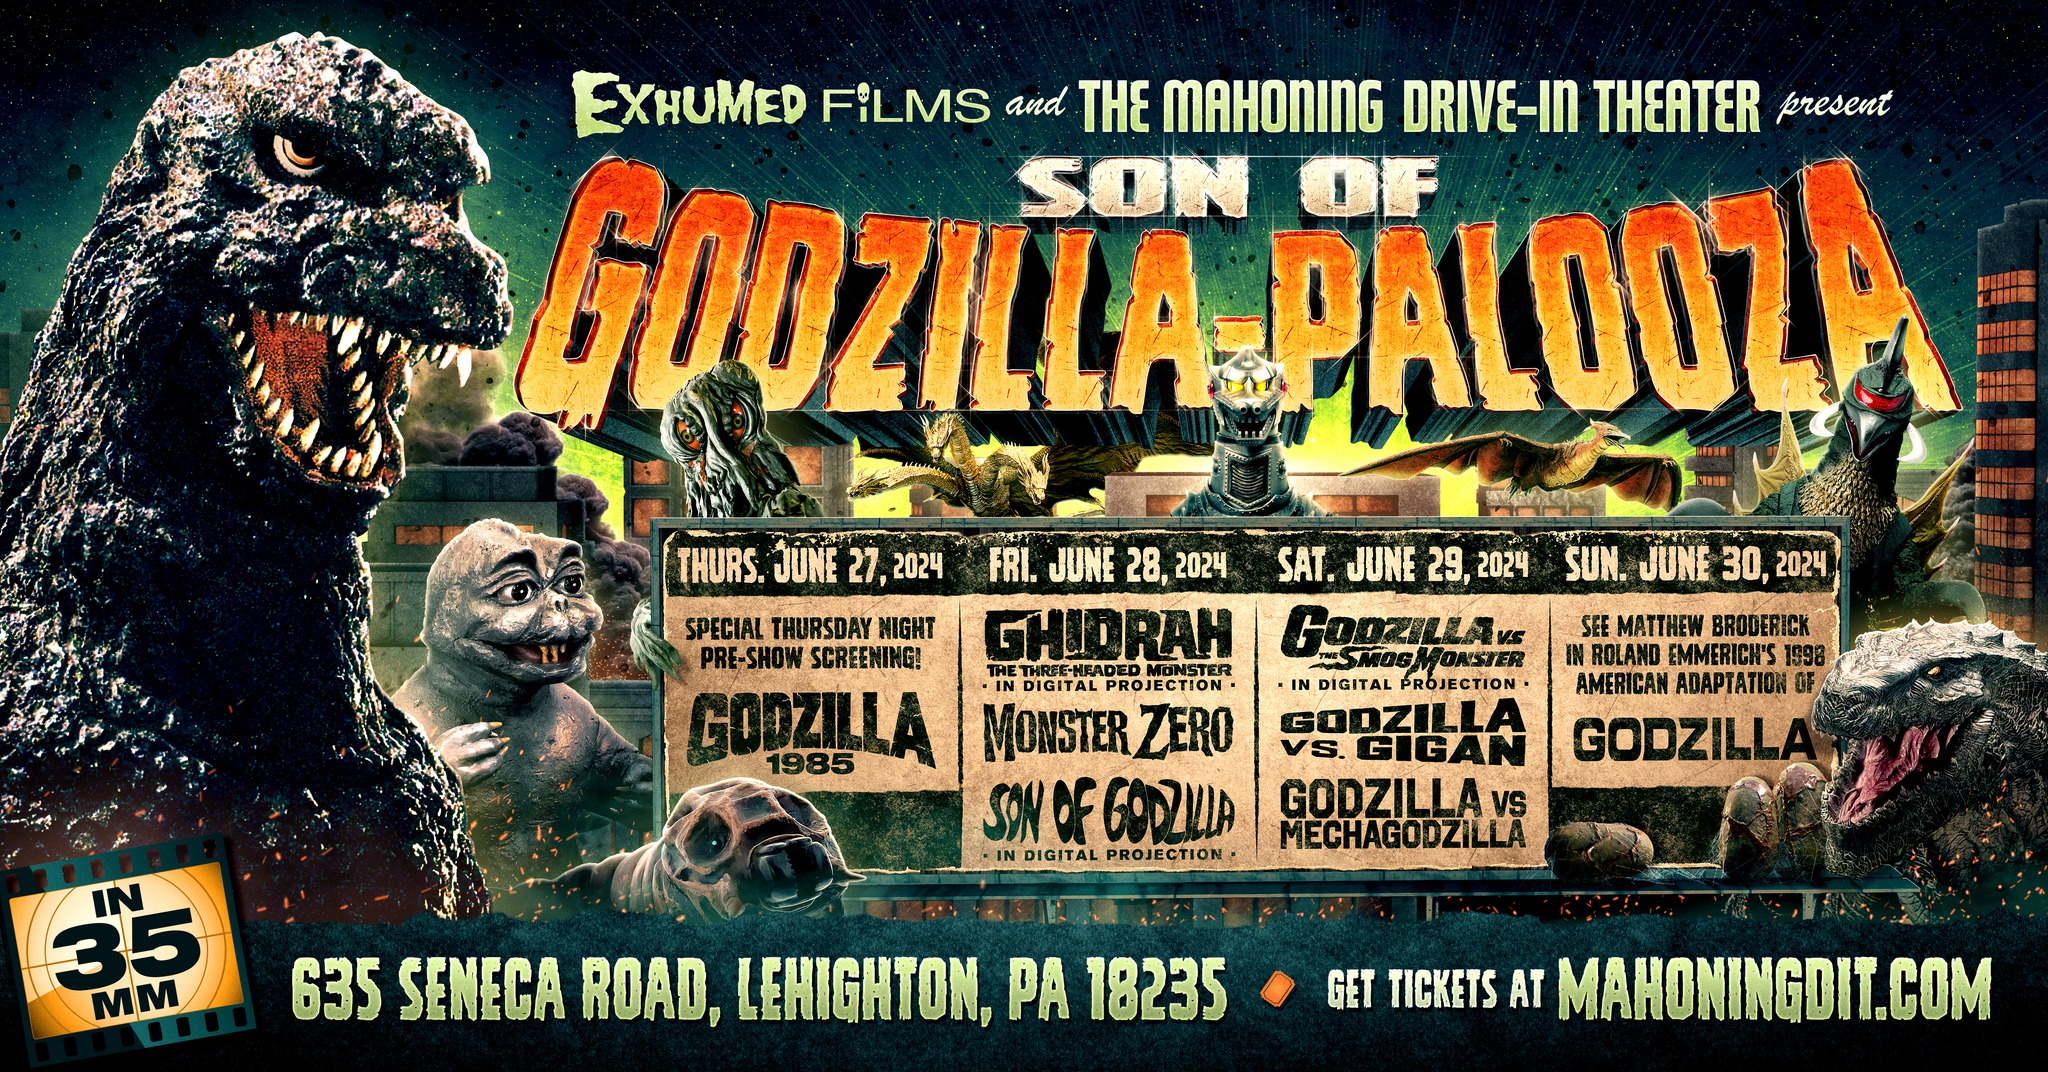 SON OF GODZILLA-PALOOZA To Screen at Historic Mahoning Drive-In Theater